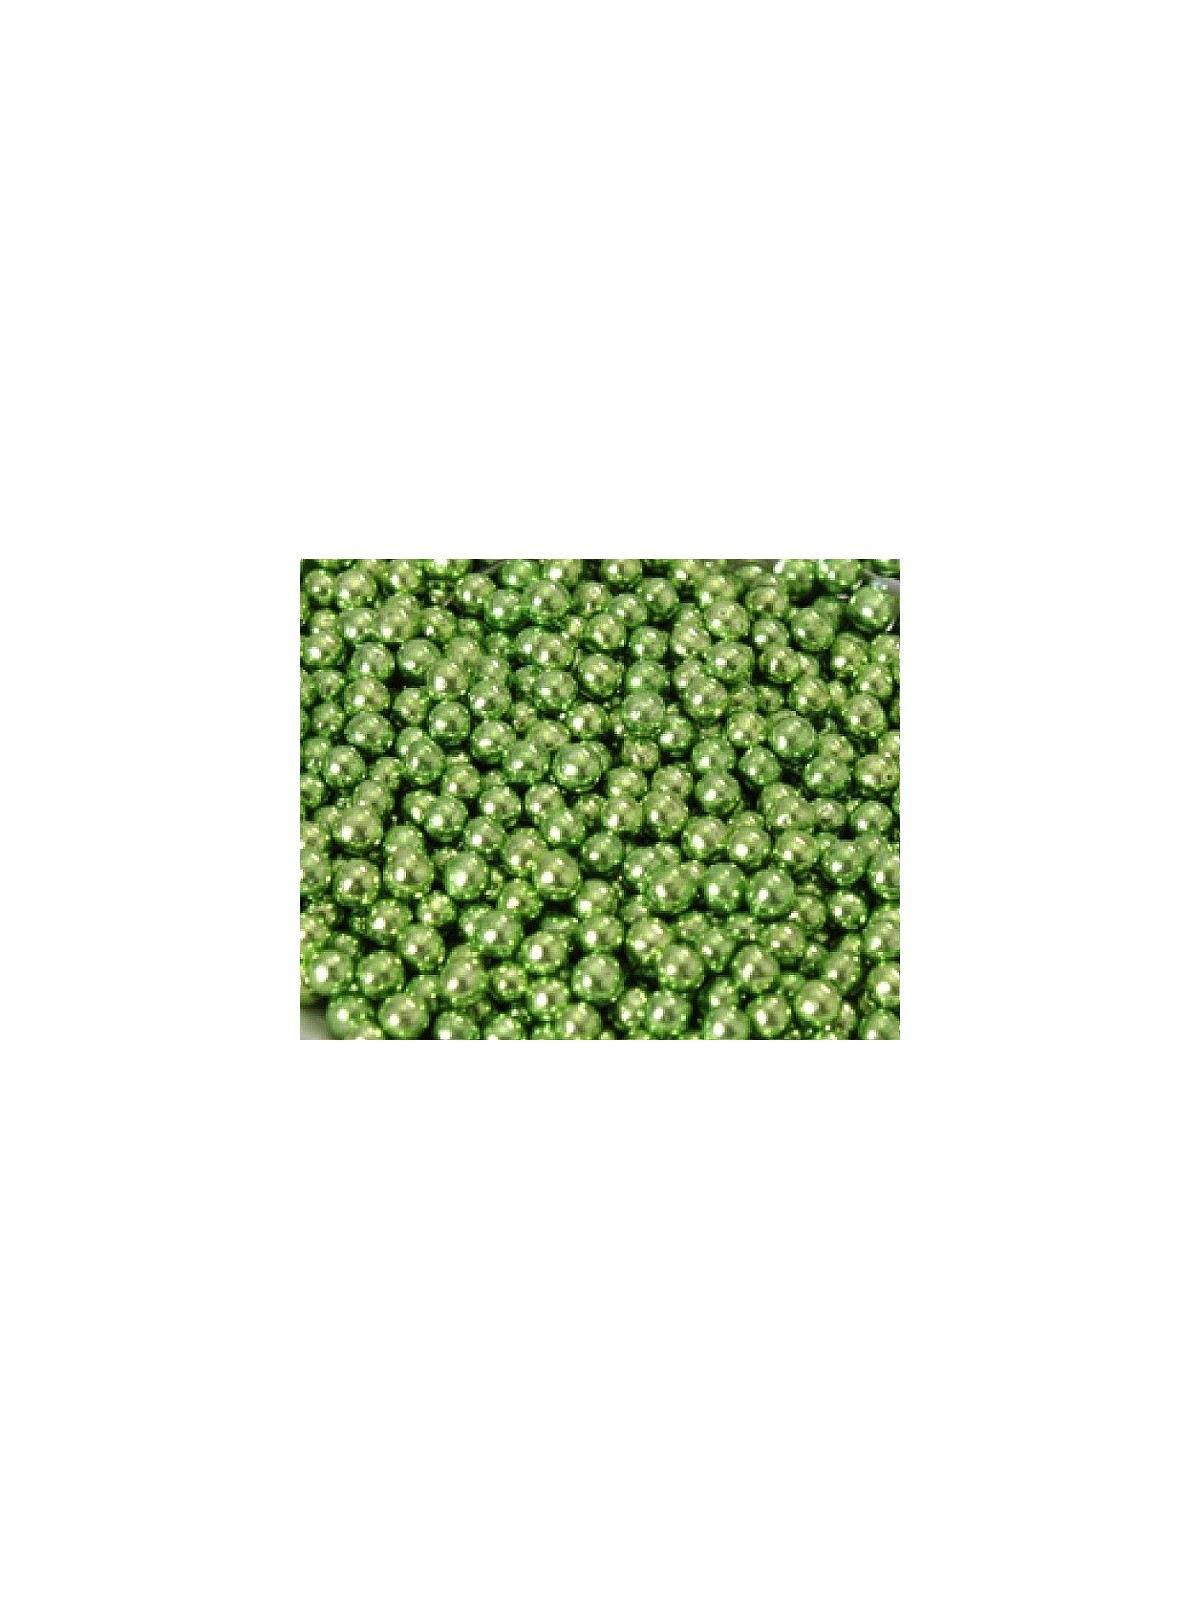 Sugar pearls 6mm - green - 50g